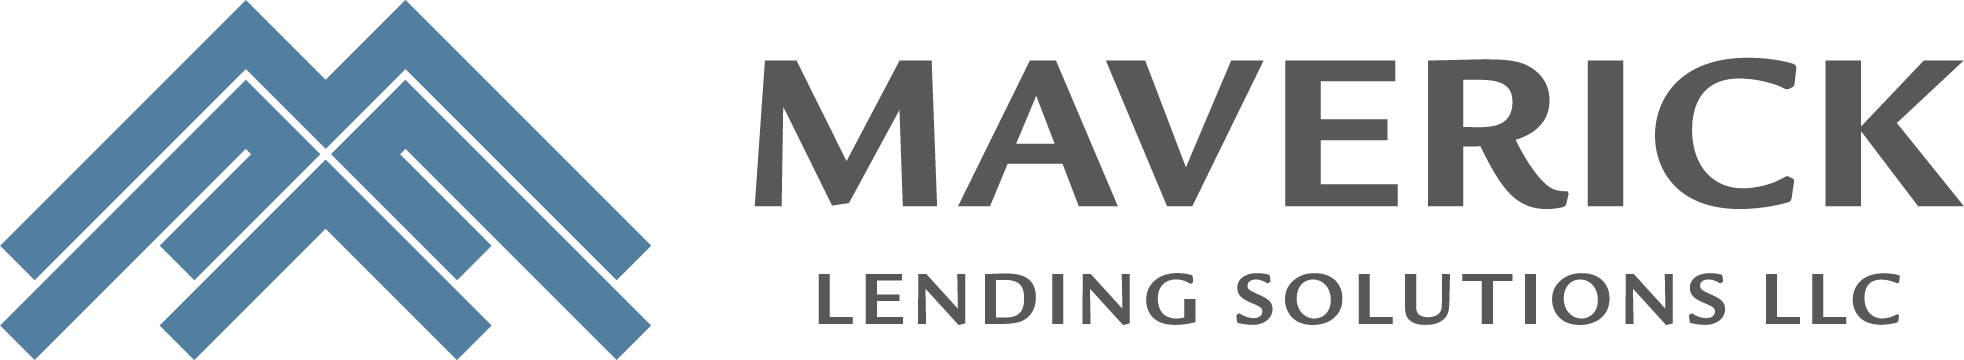 Maverick Lending Solutions LLC